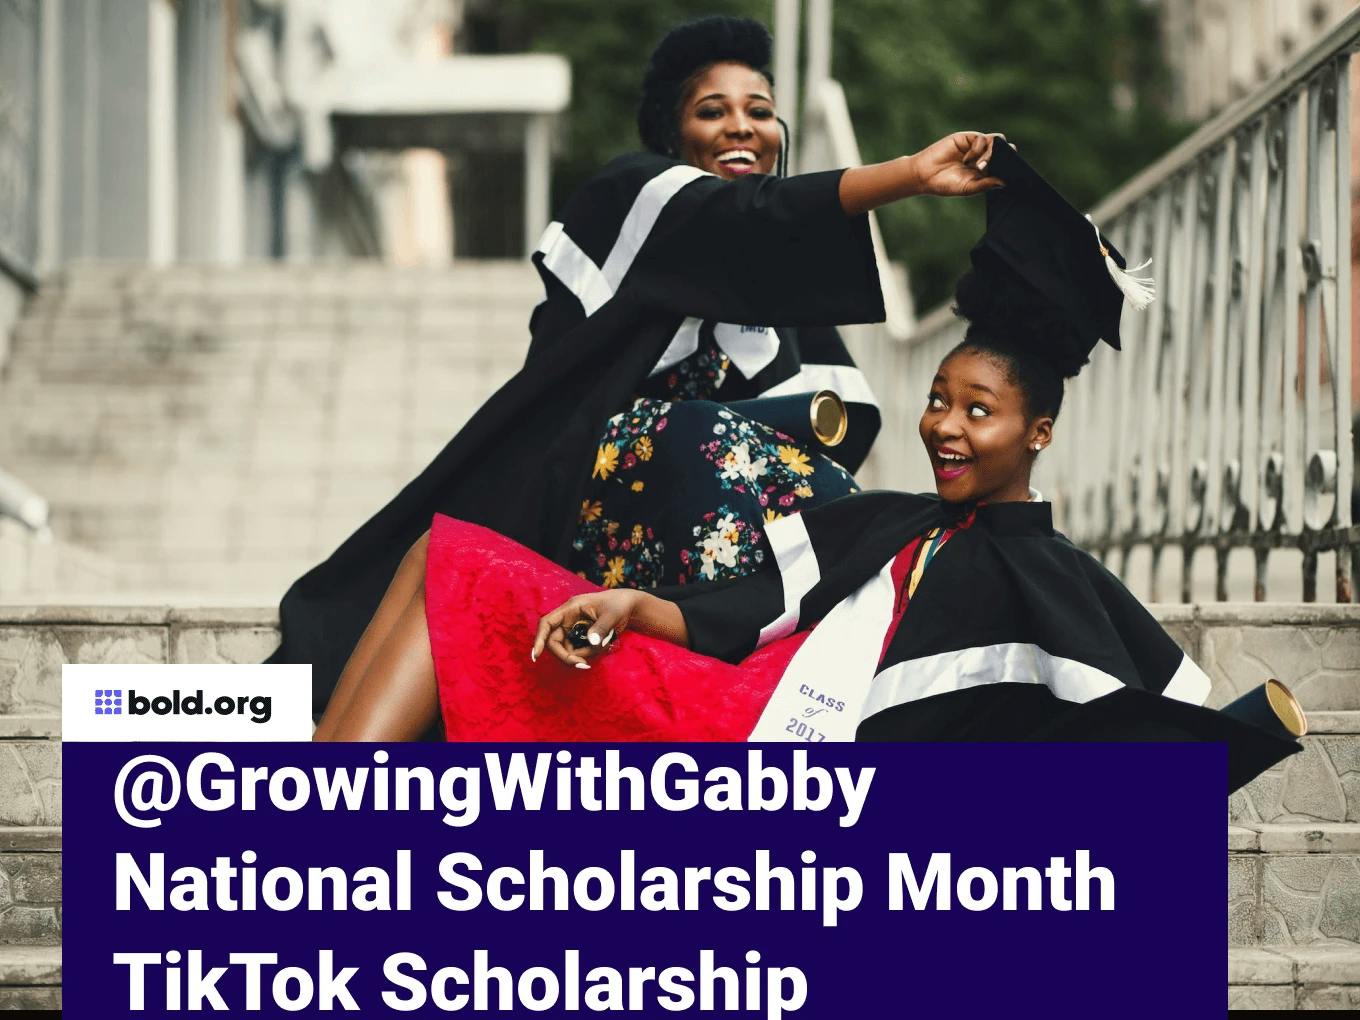 @GrowingWithGabby National Scholarship Month TikTok Scholarship